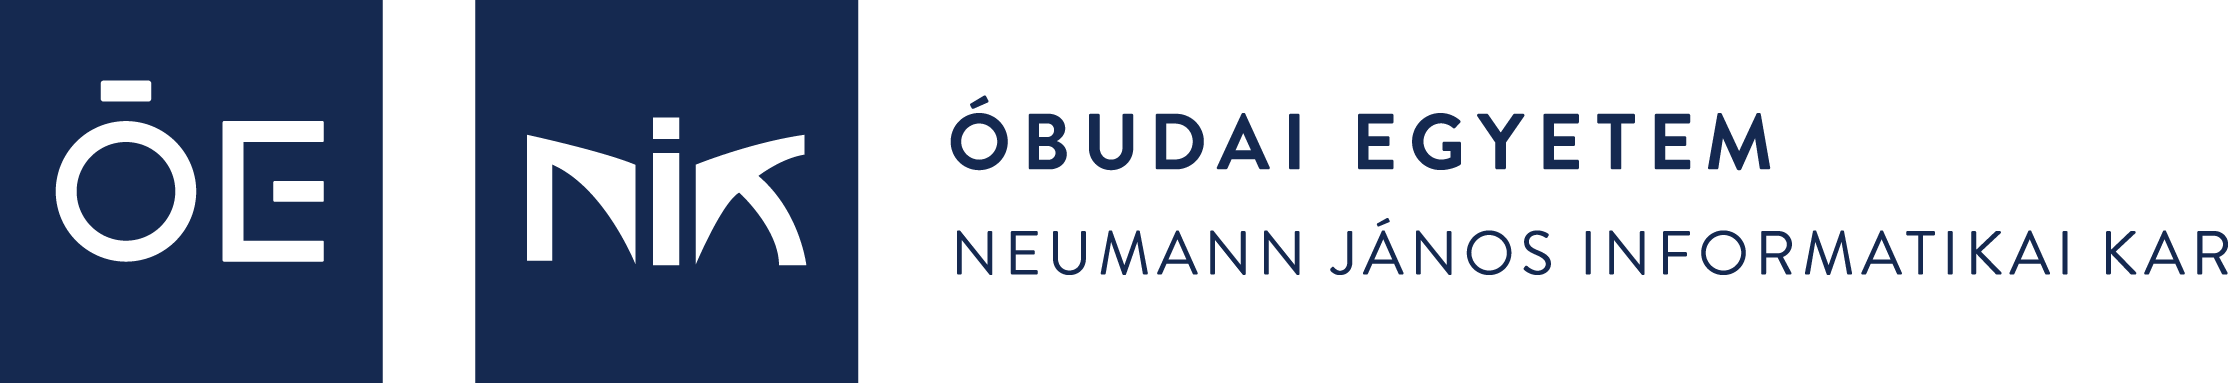 OE NIK logo